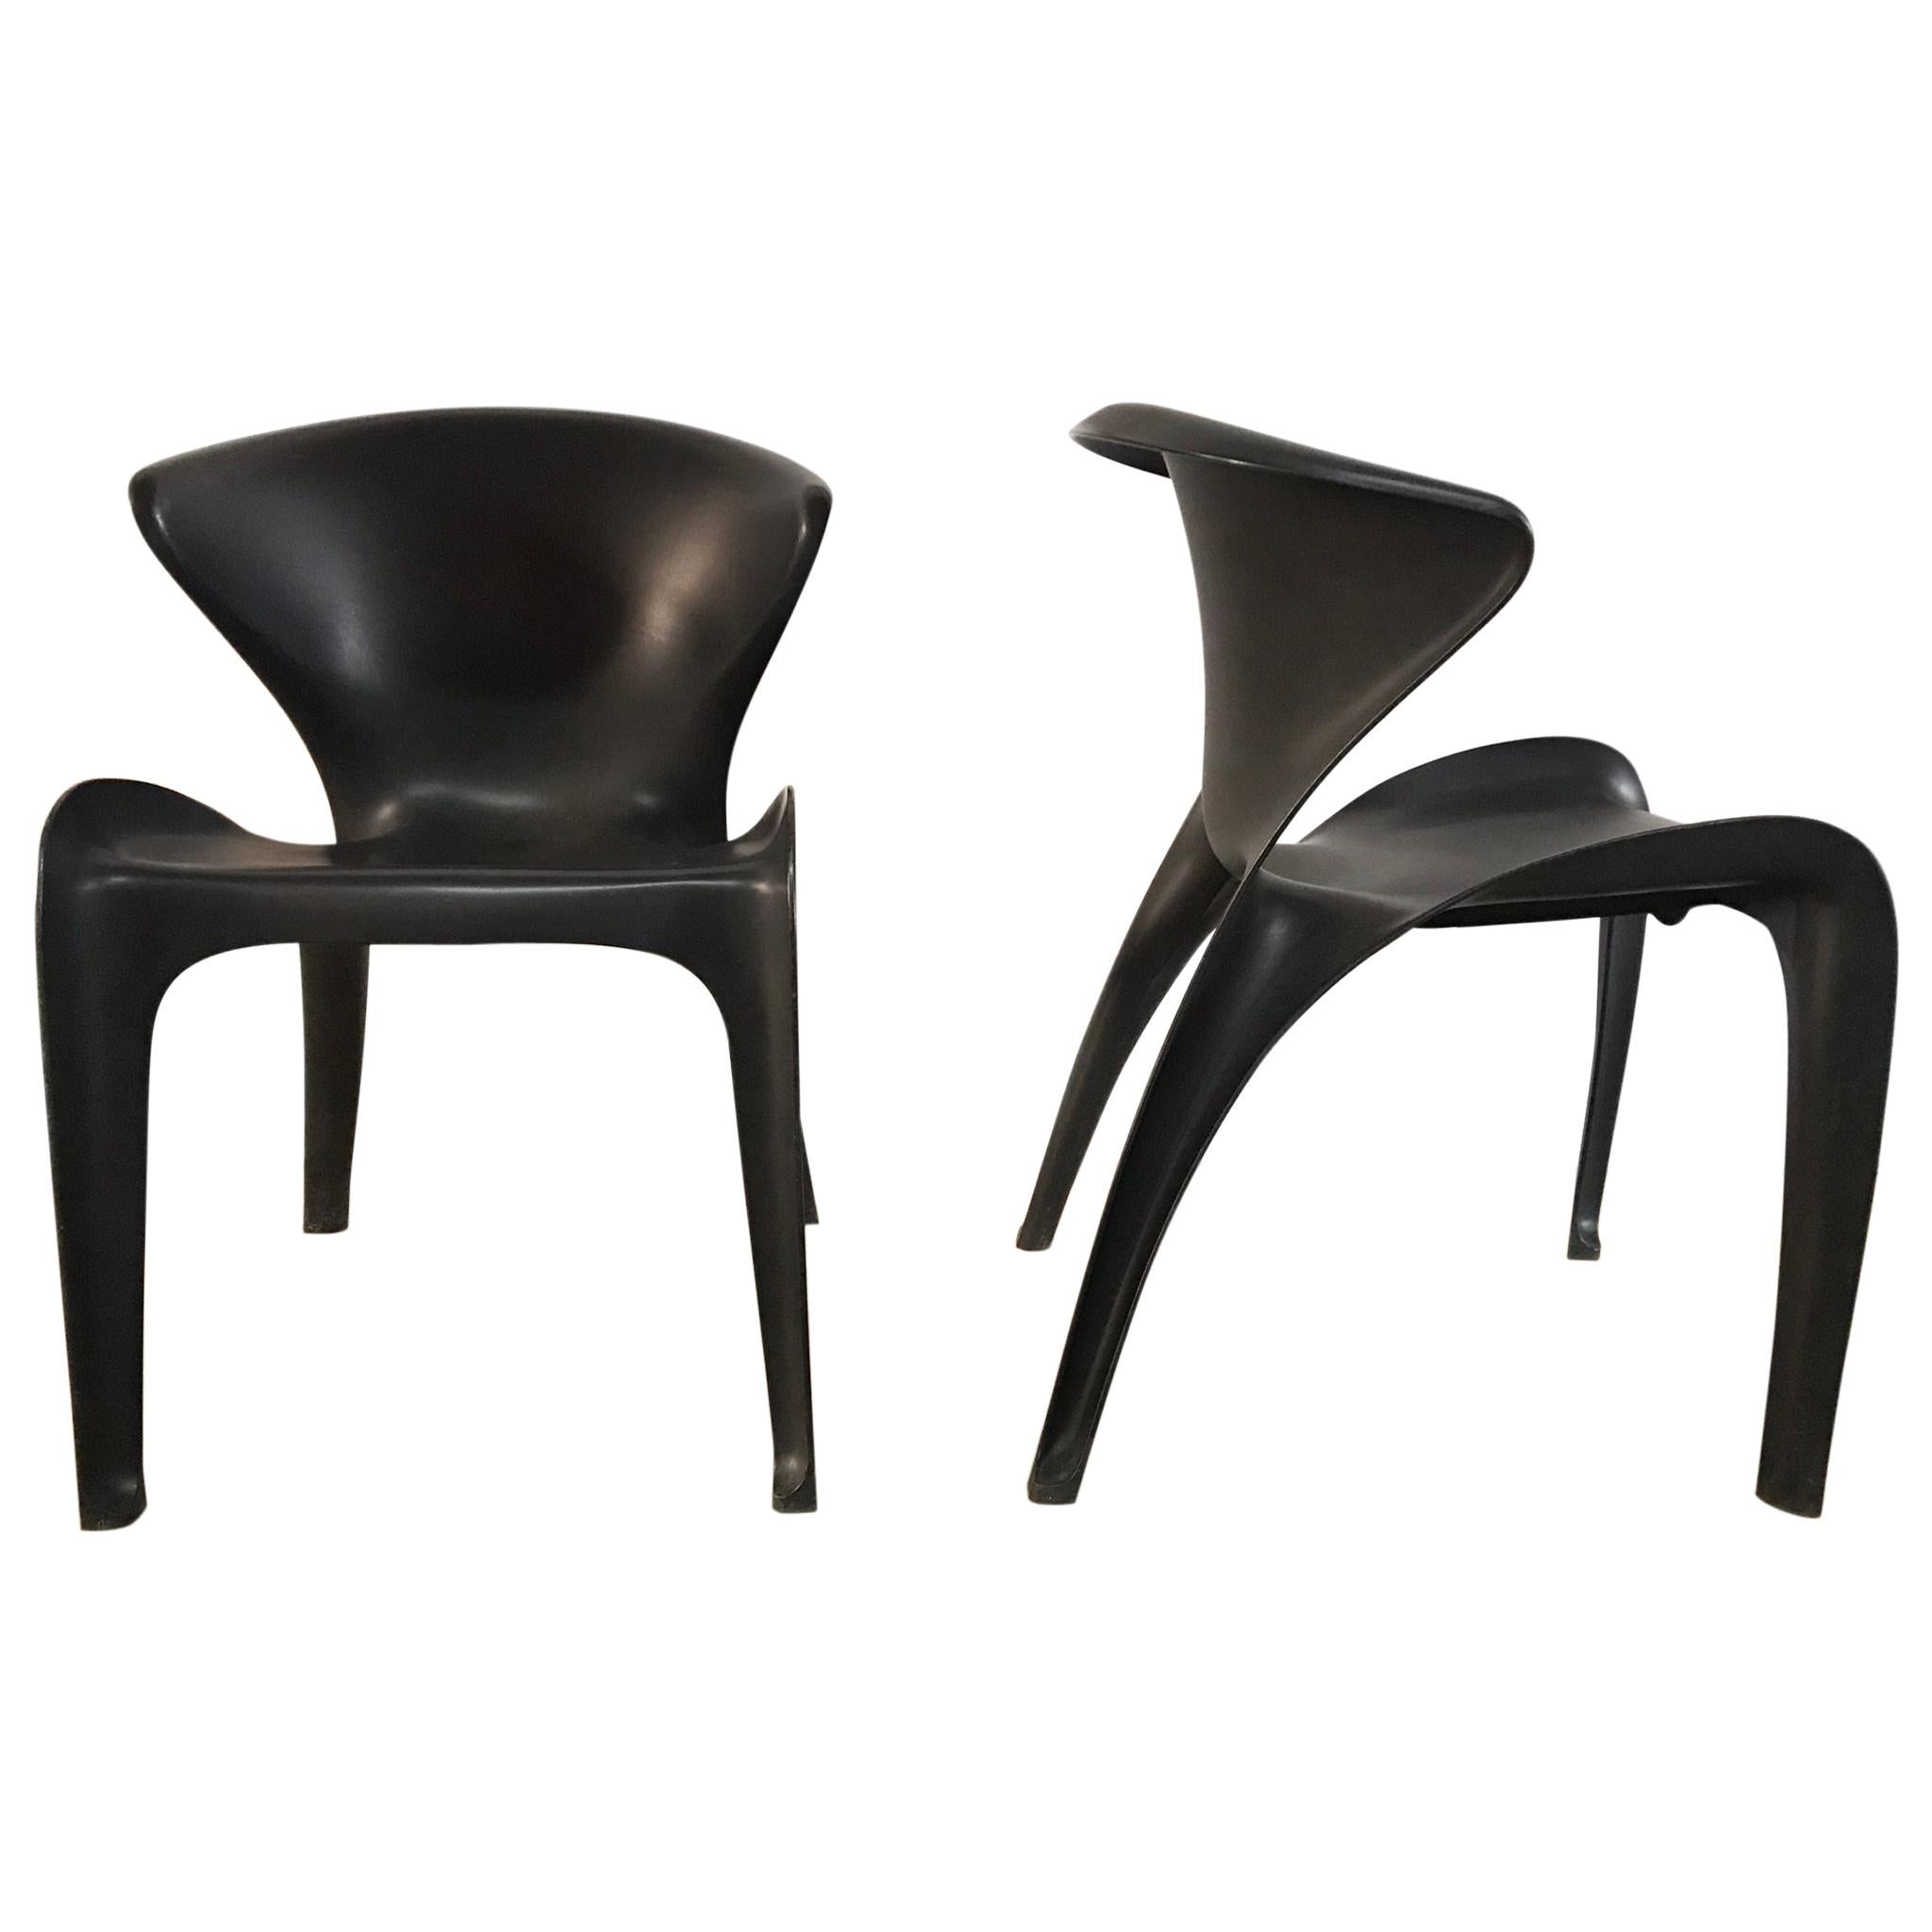 Pair of William Sawaya “Calla” Chairs in Matte Black for Heller, 2002